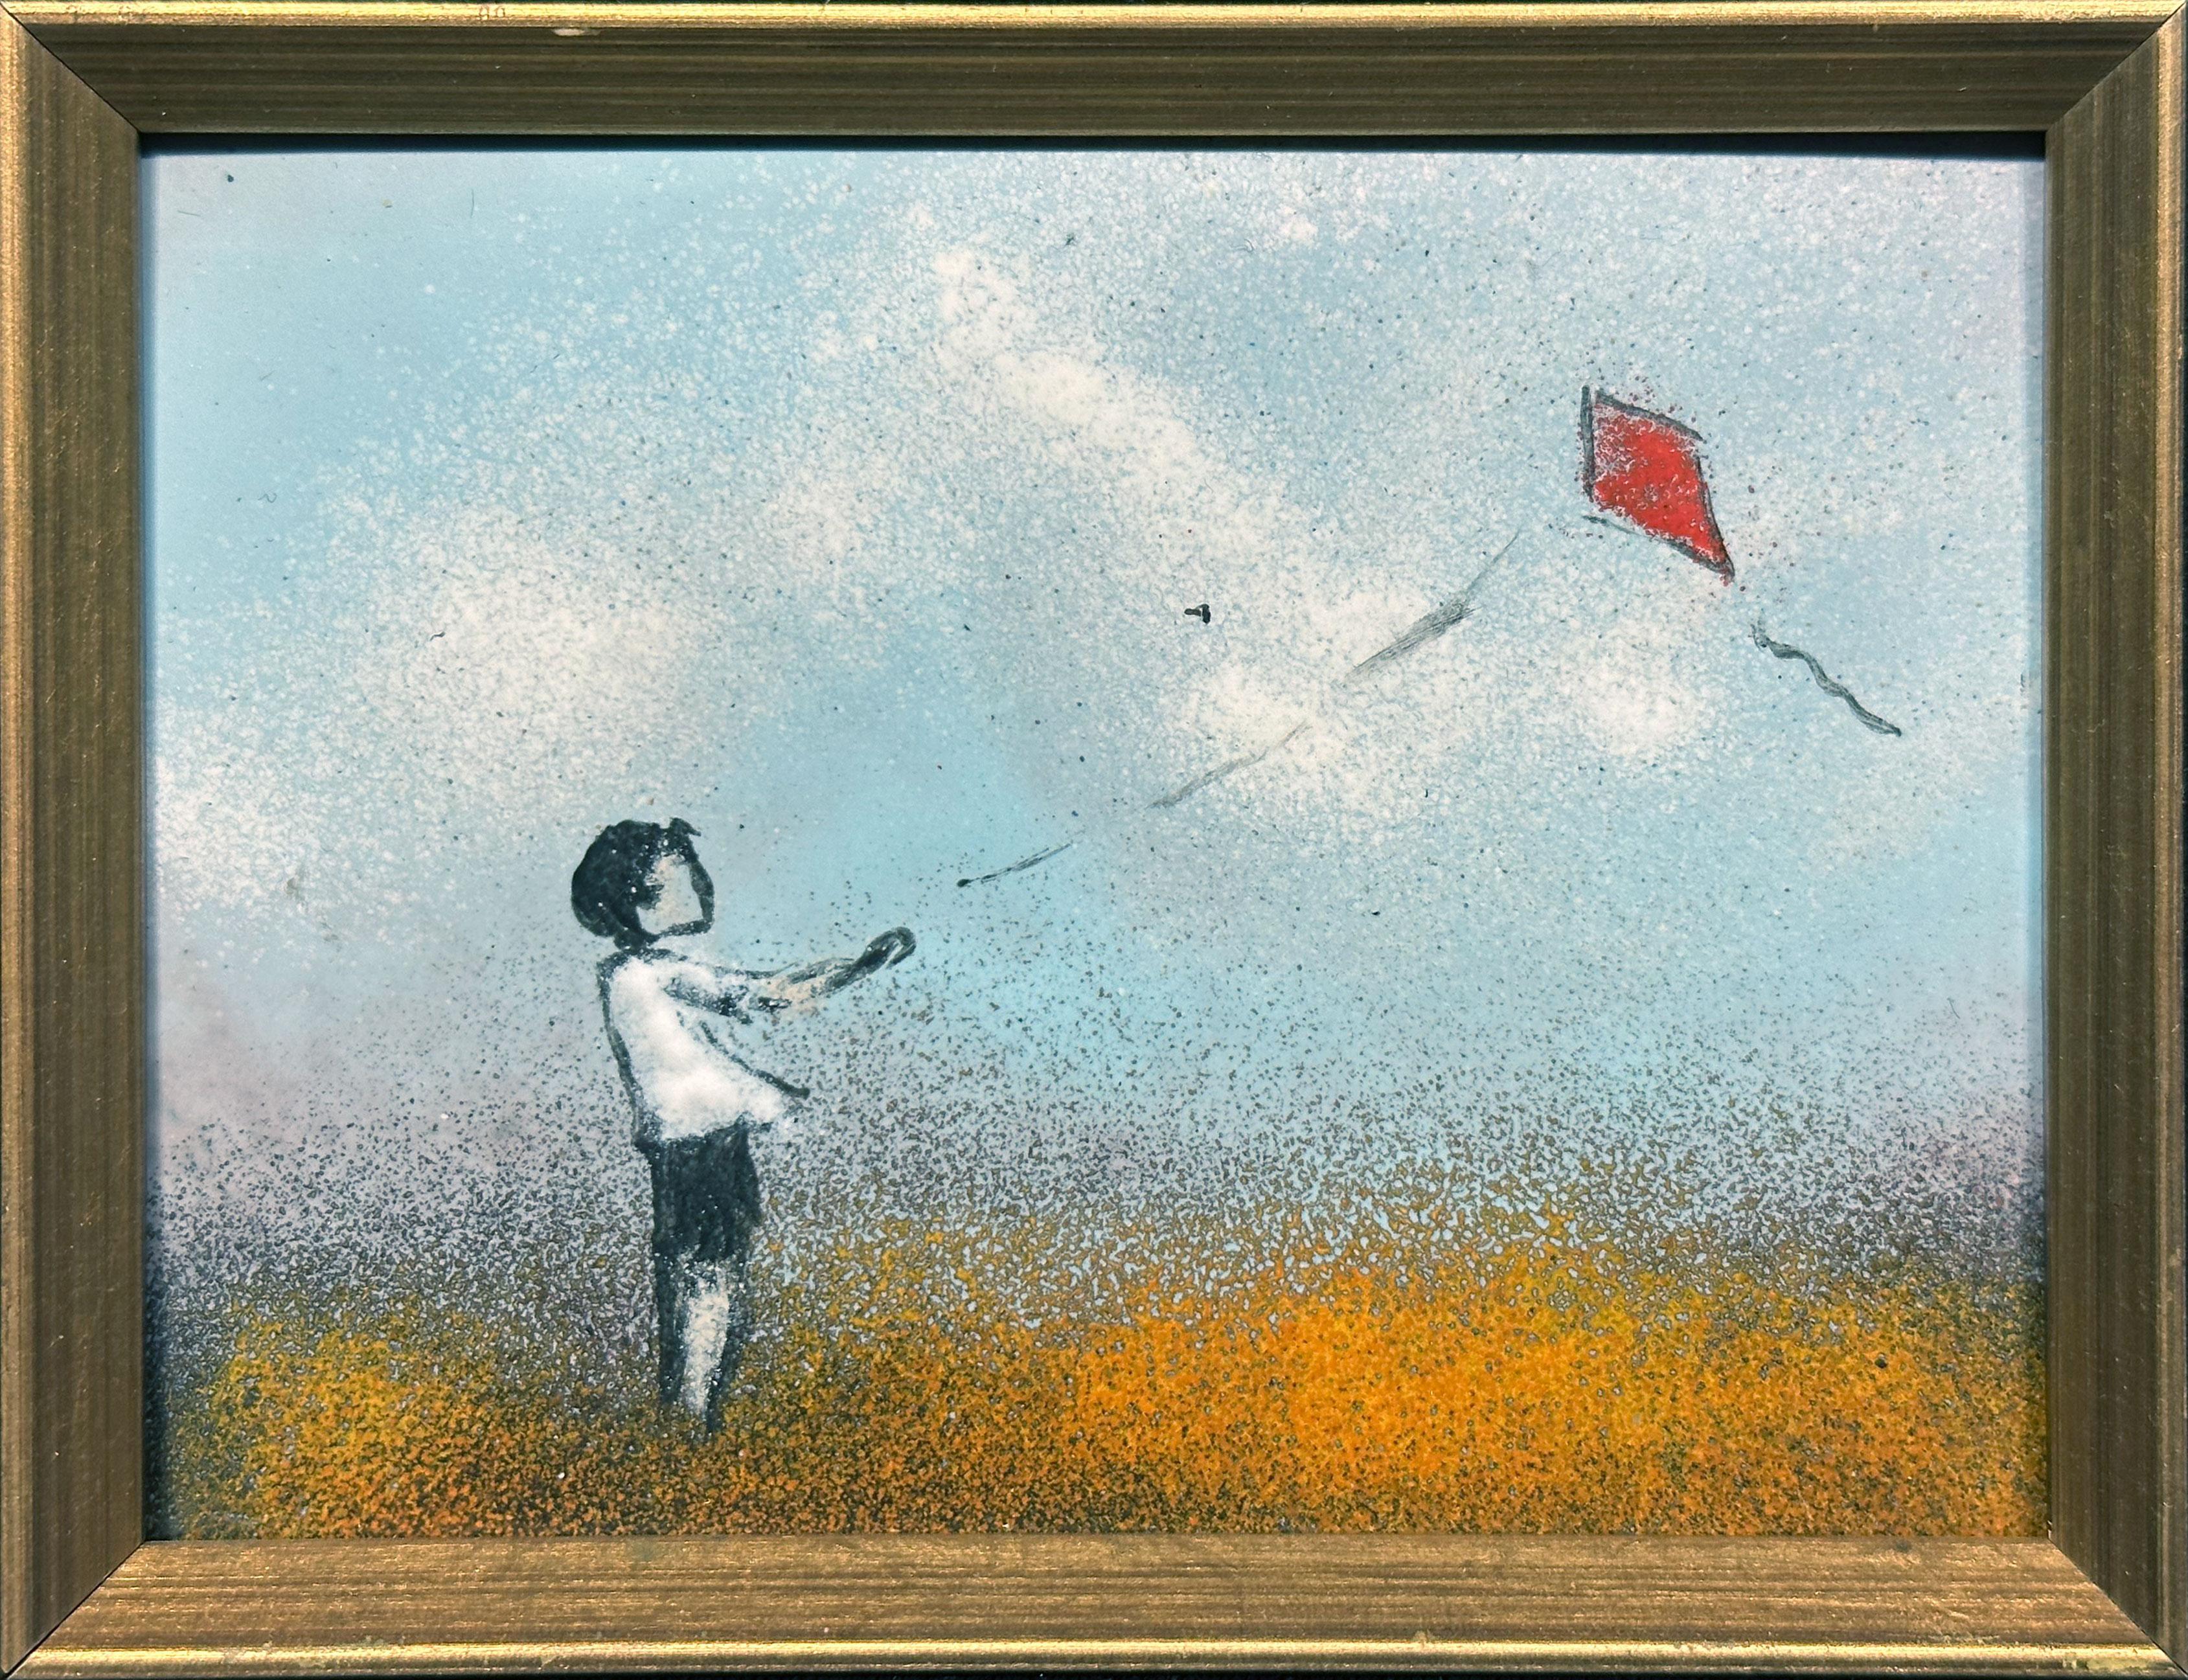 Kite - Painting by Max Karp